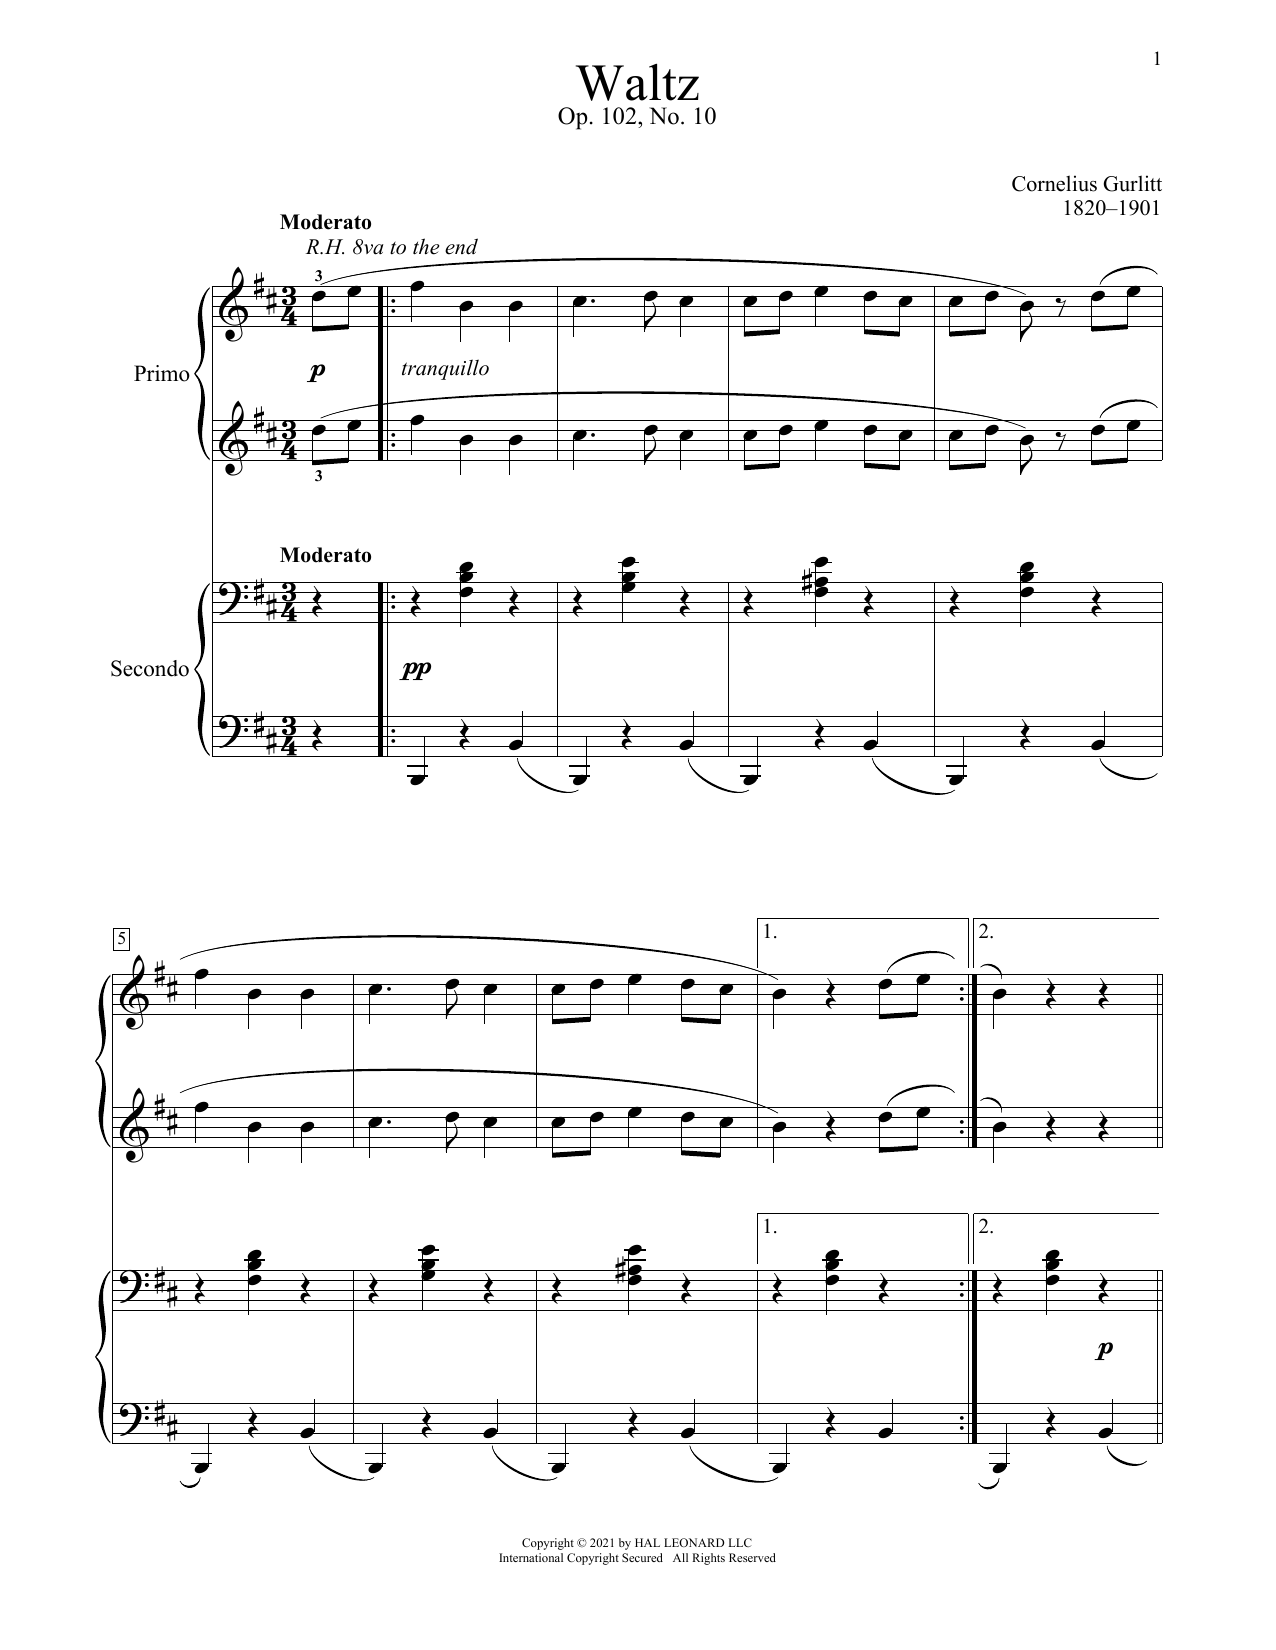 Cornelius Gurlitt Waltz, Op. 102, No. 10 sheet music notes and chords arranged for Piano Duet